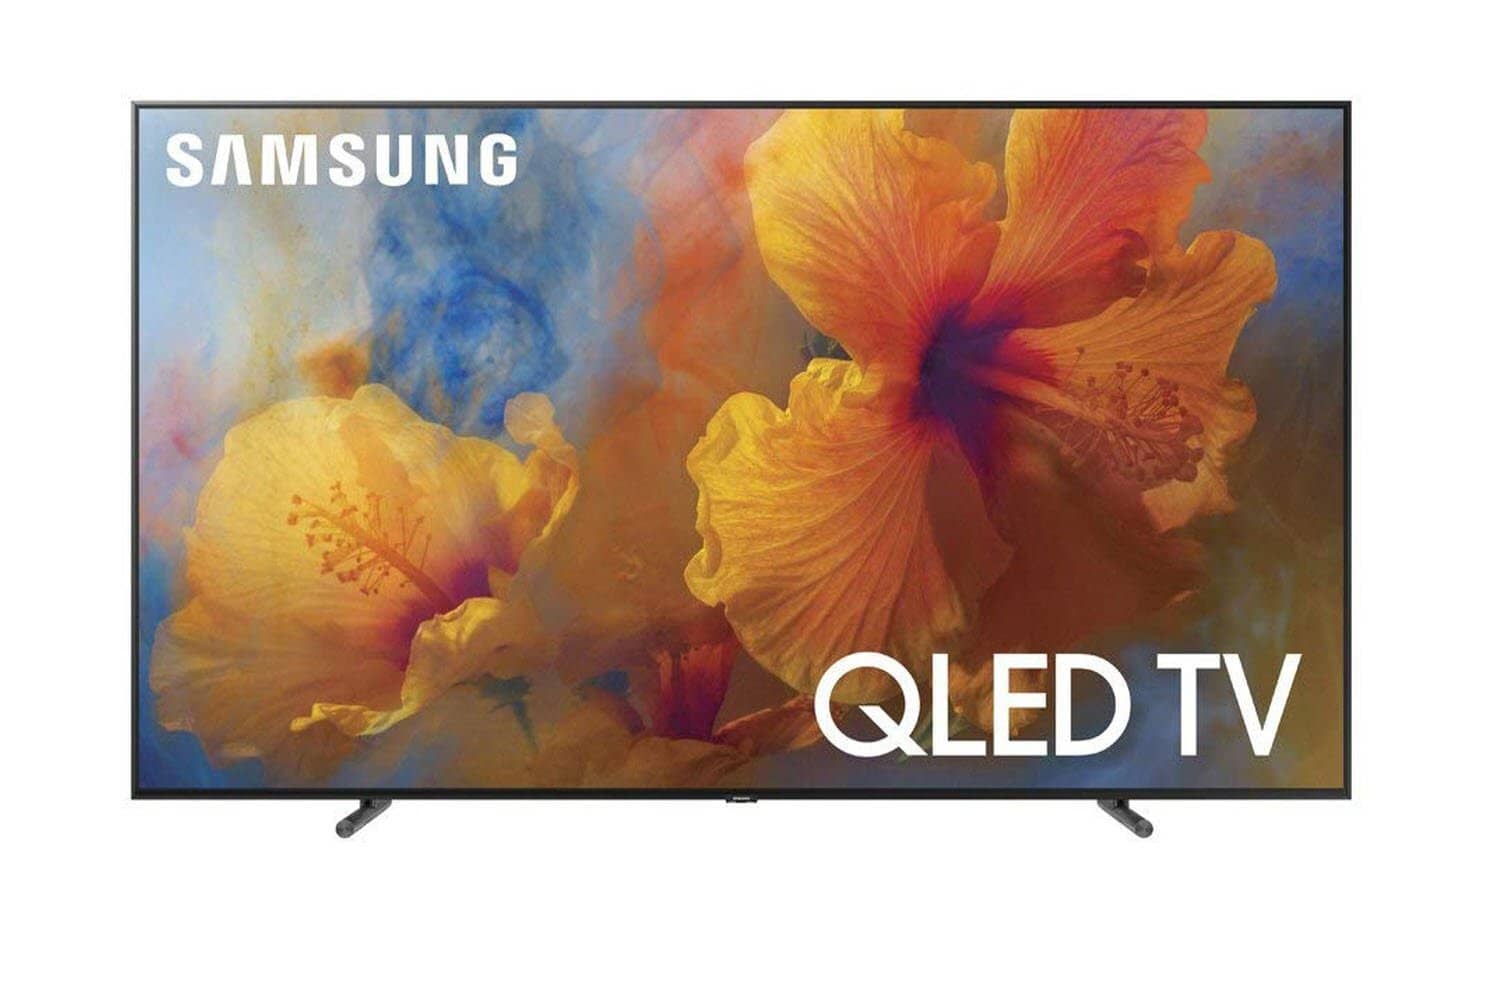 Samsung Electronics QN75Q9 75-Inch 4K Ultra HD Smart LED TV